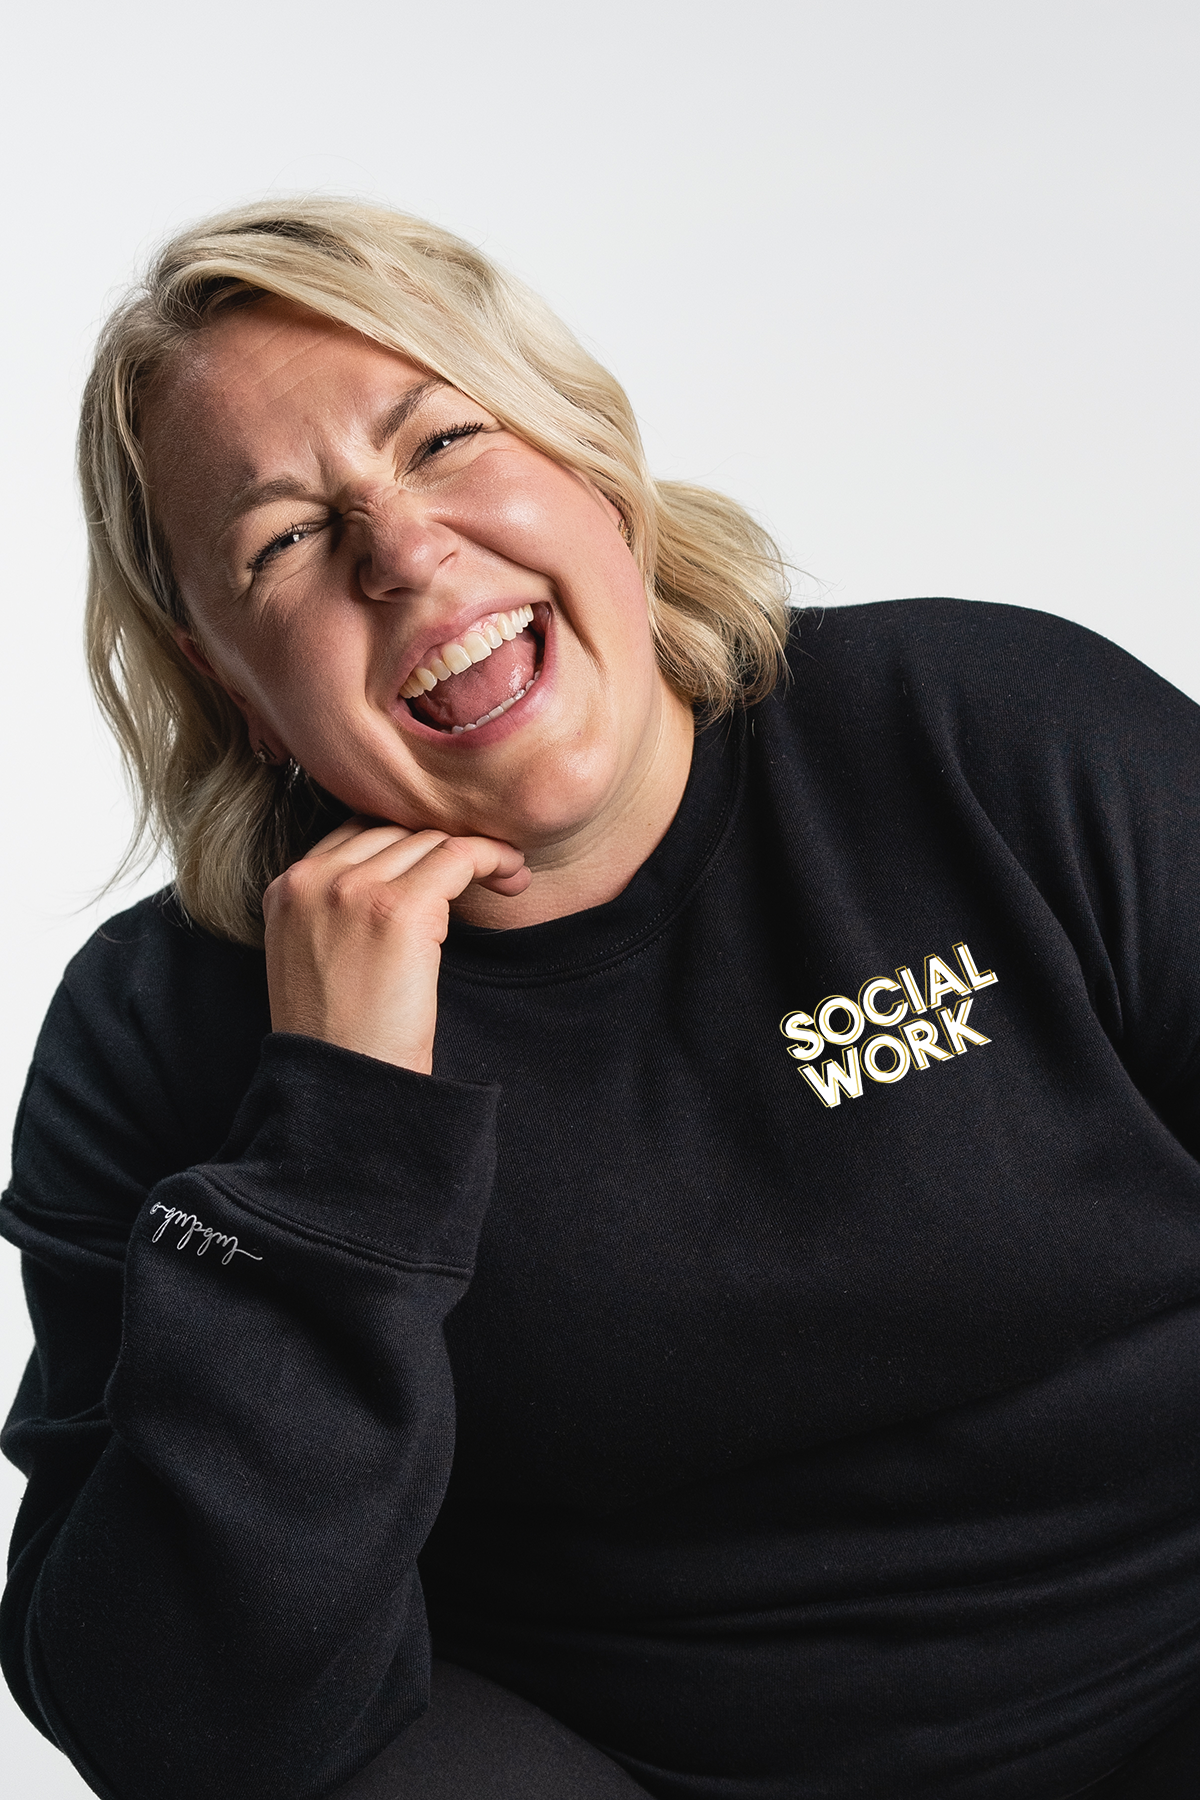 Social Work Creds - Pocketed Crew Sweatshirt